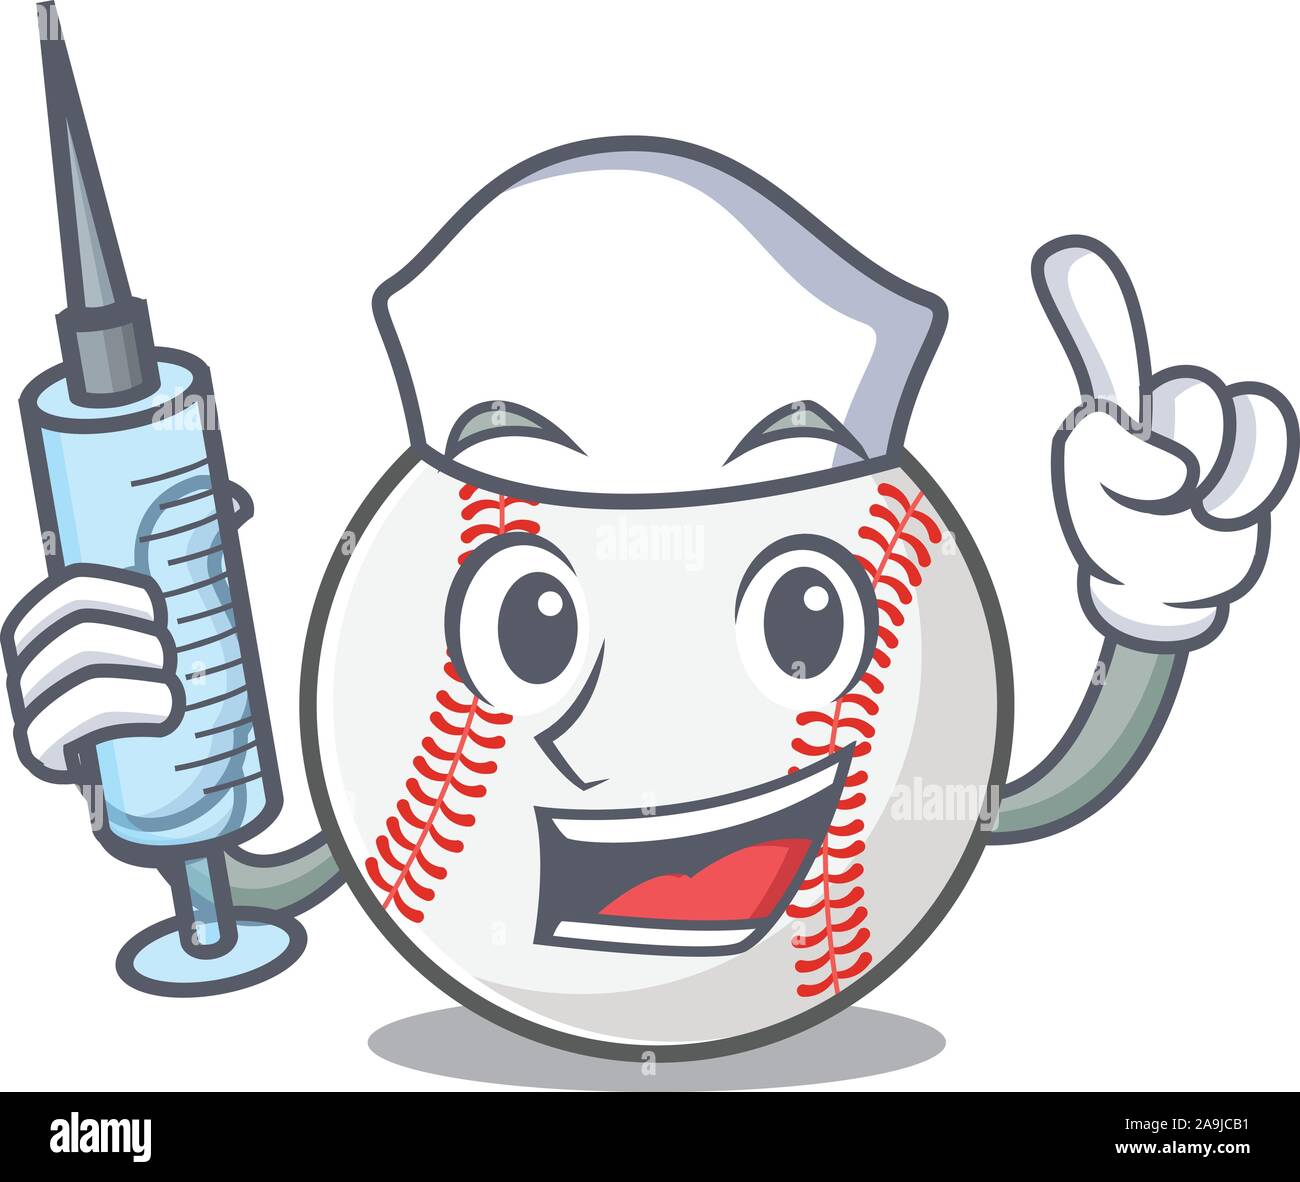 Mascot cartoon baseball the in nurse shape Stock Vector